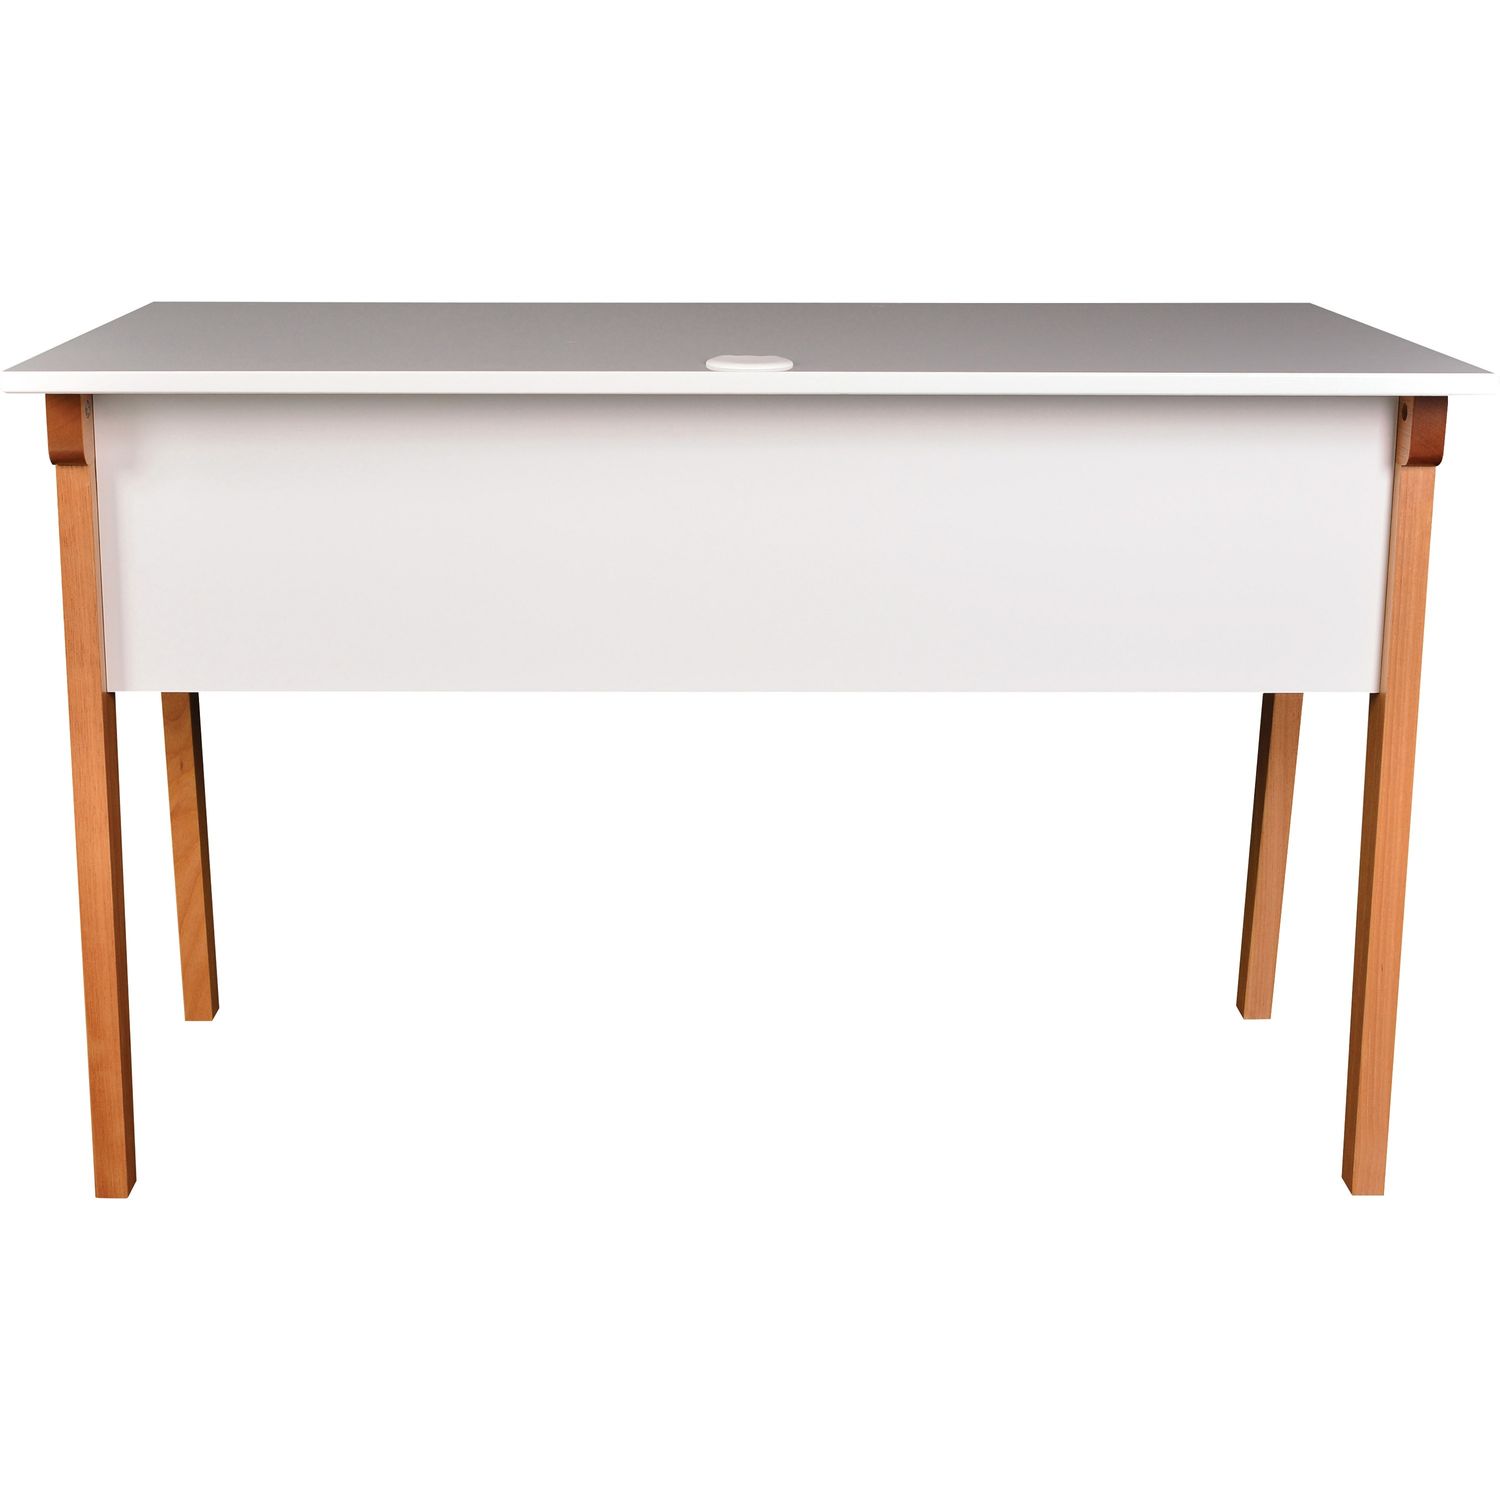 Mid-century Modern Office Desk White Rectangle Top, Natural Four Leg Base, 4 Legs, 23.50" Table Top Length x 71" Table Top Width x 0.75" Table Top Thickness, 29.50" Height